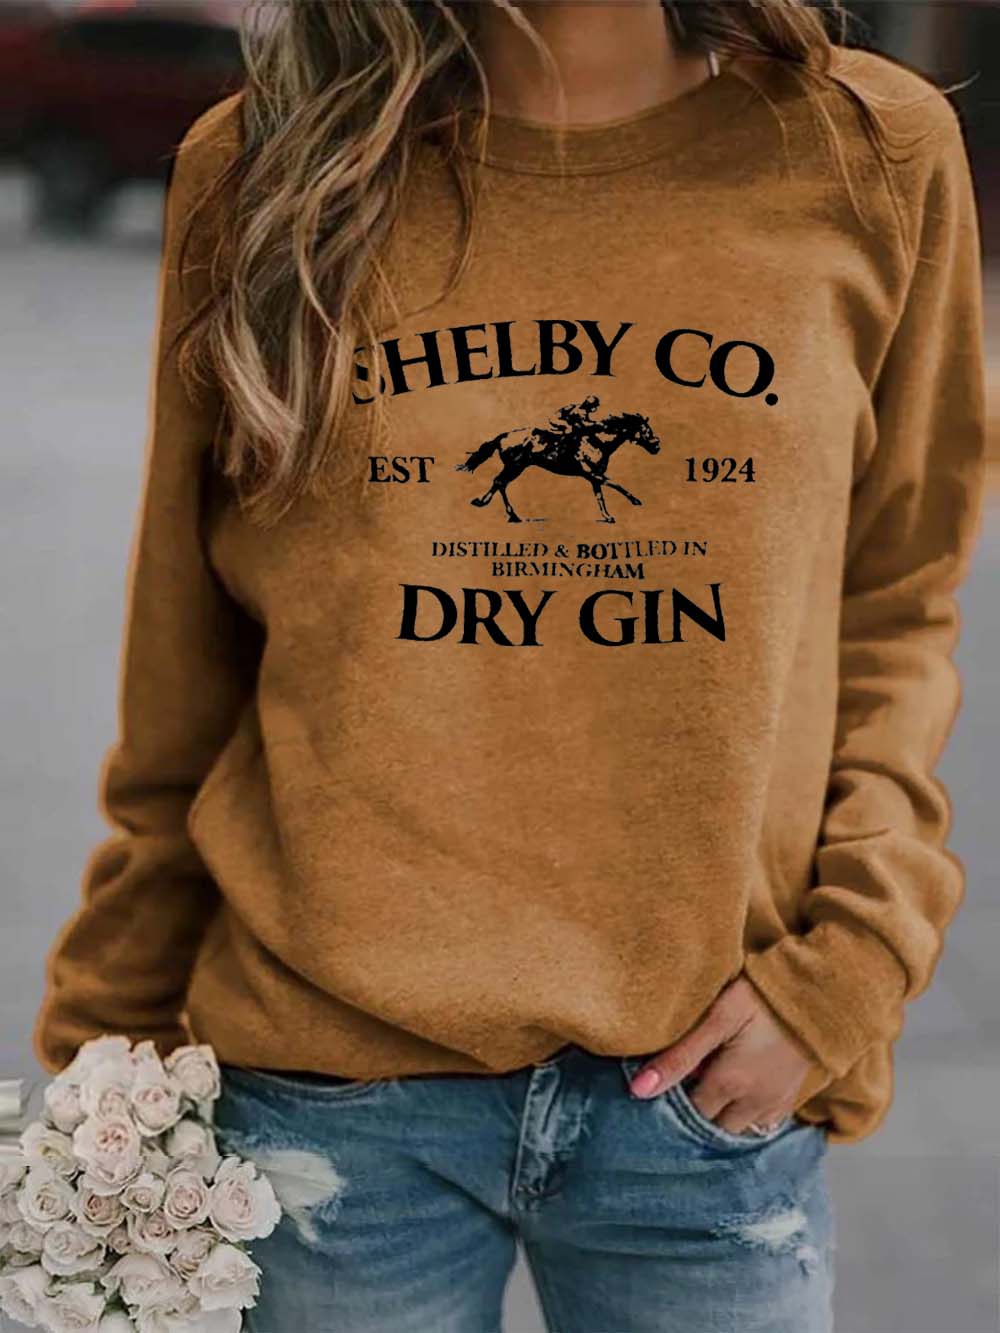 Shelby co. est 1924. distilled. bottled in birmingham dry gin